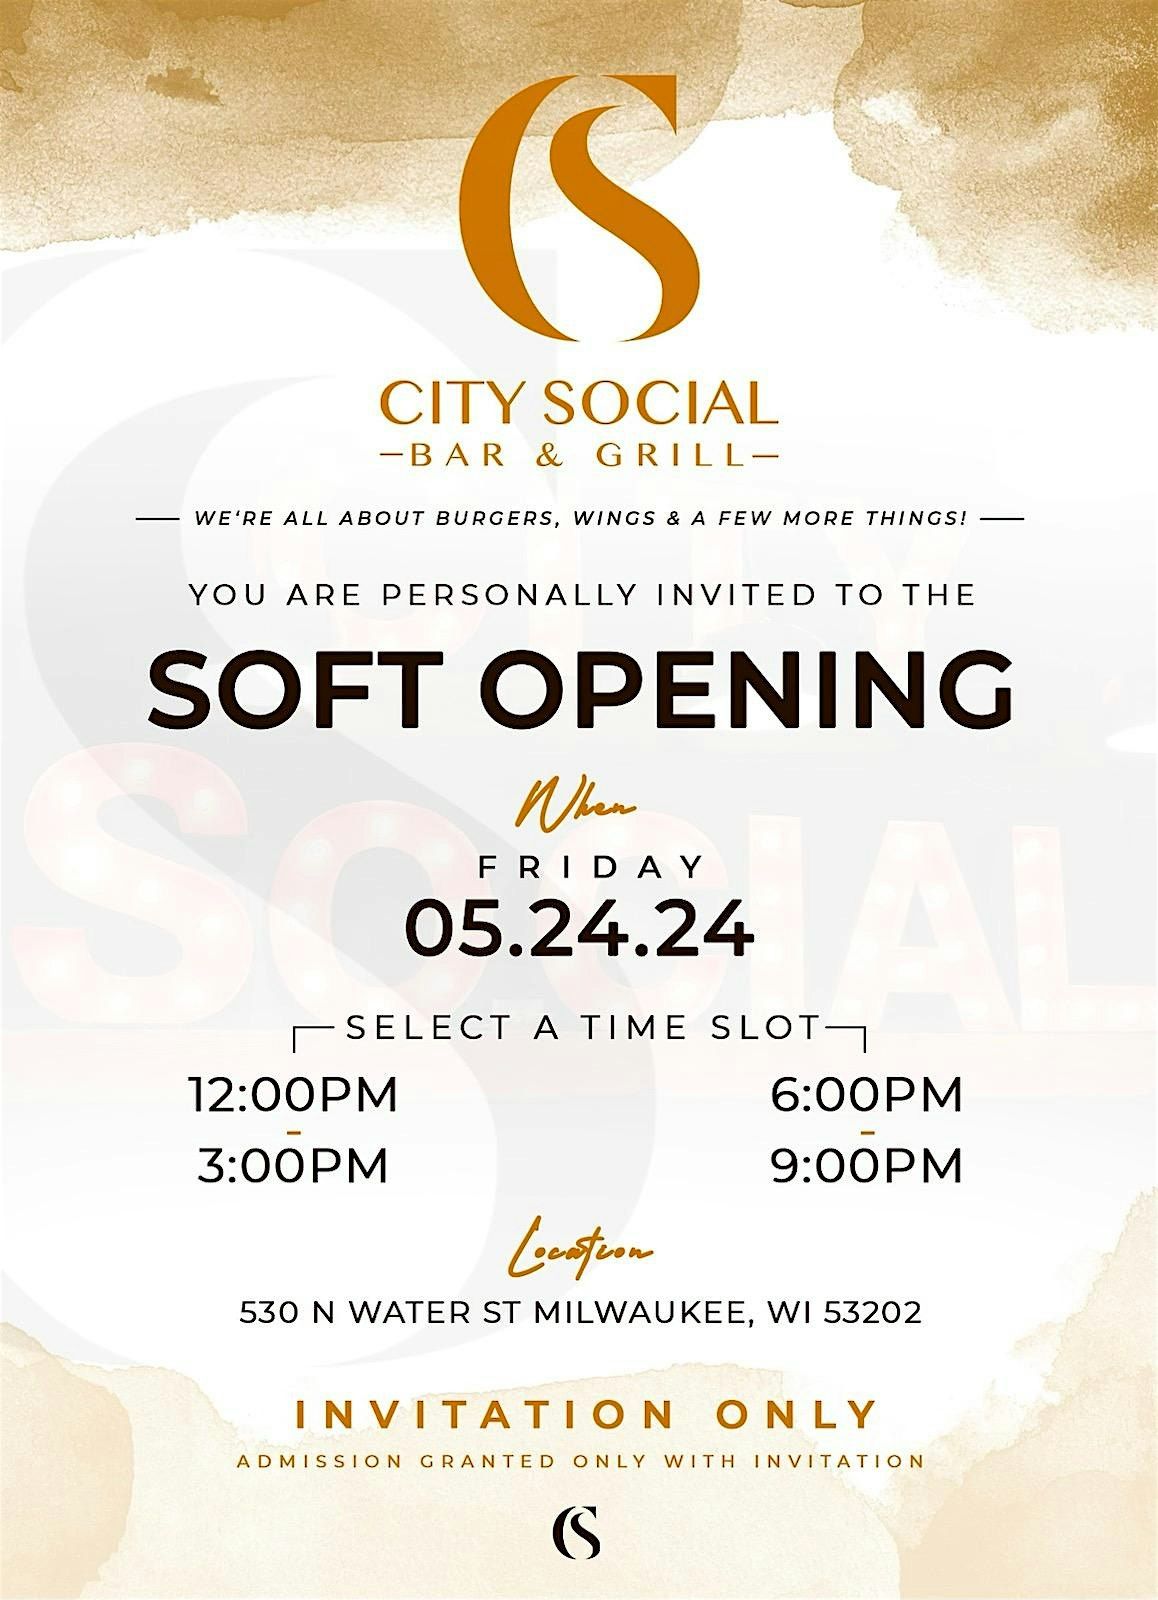 City Social Bar & Grill : Soft Opening